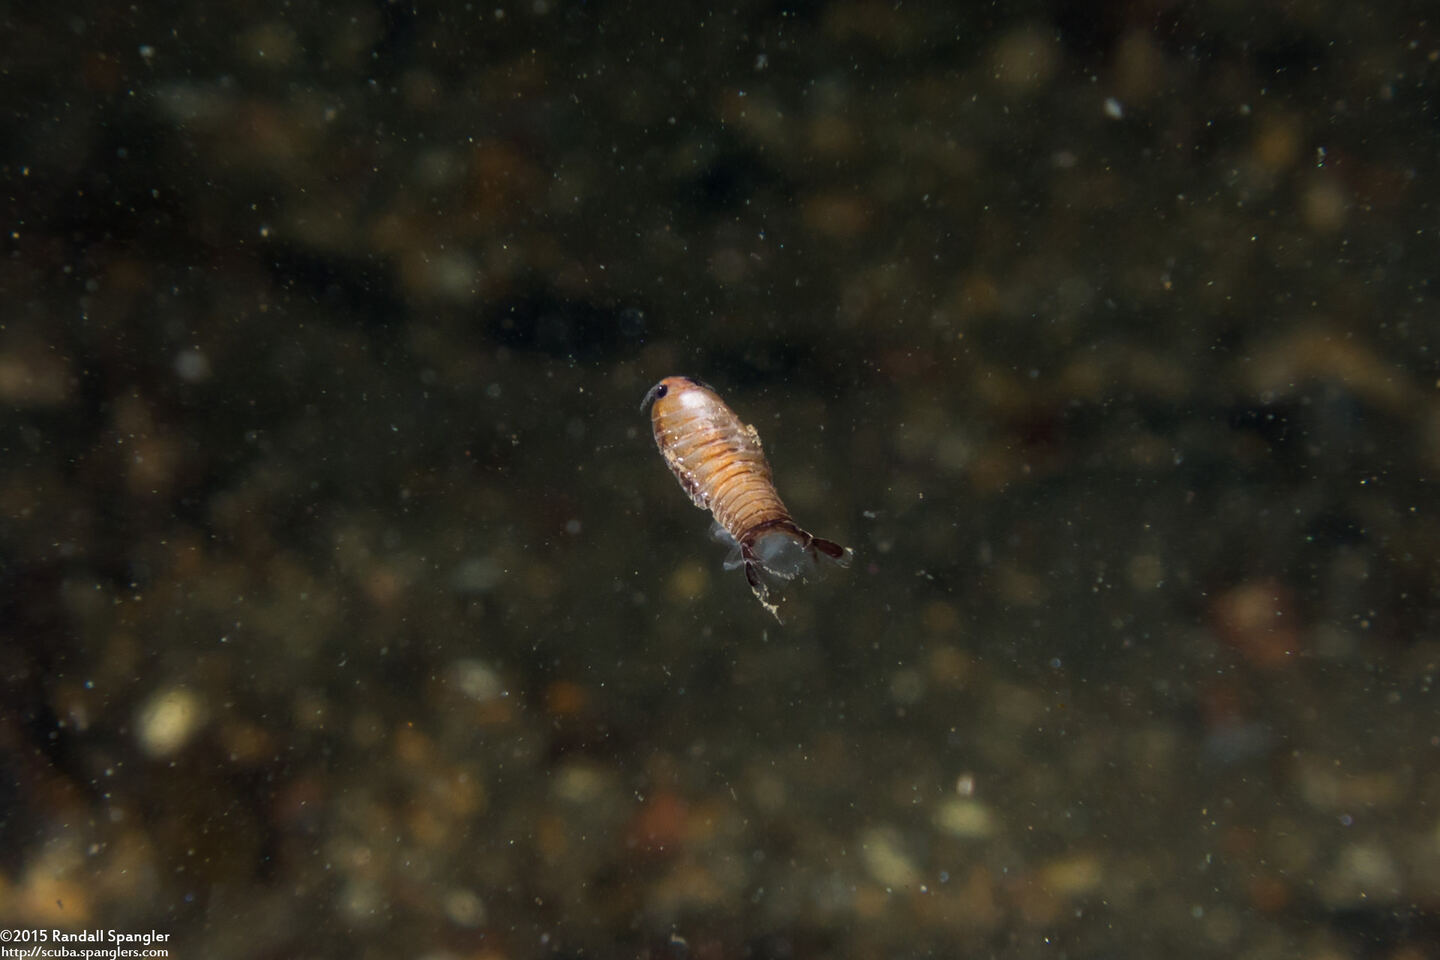 Cirolana harfordi (Harford's Isopod)